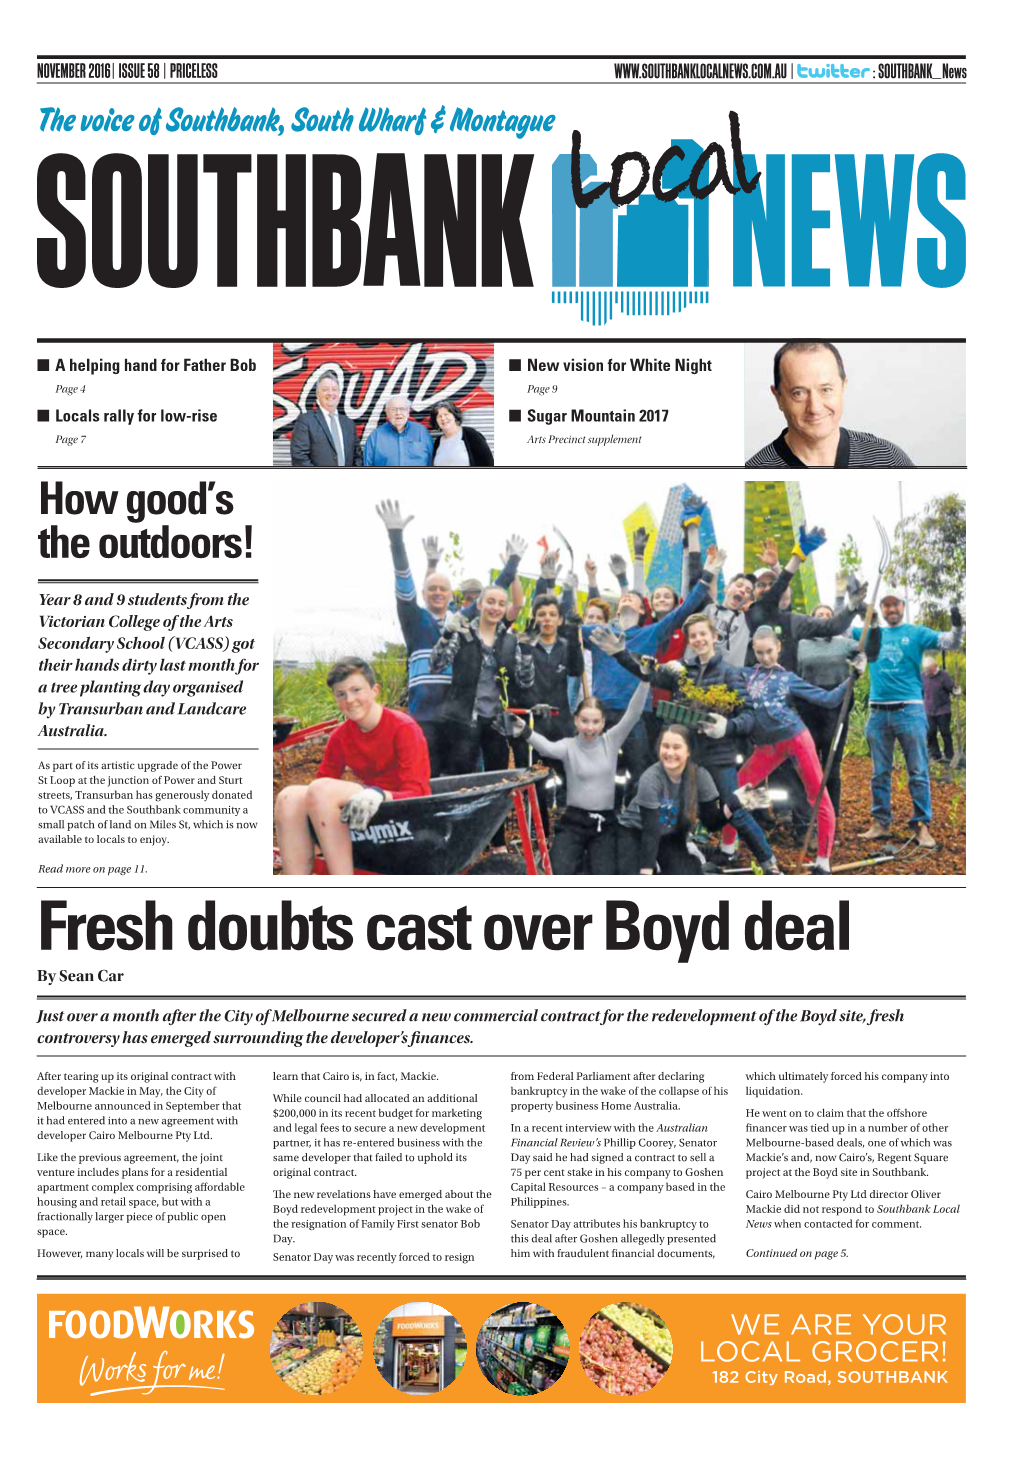 Fresh Doubts Cast Over Boyd Deal by Sean Car